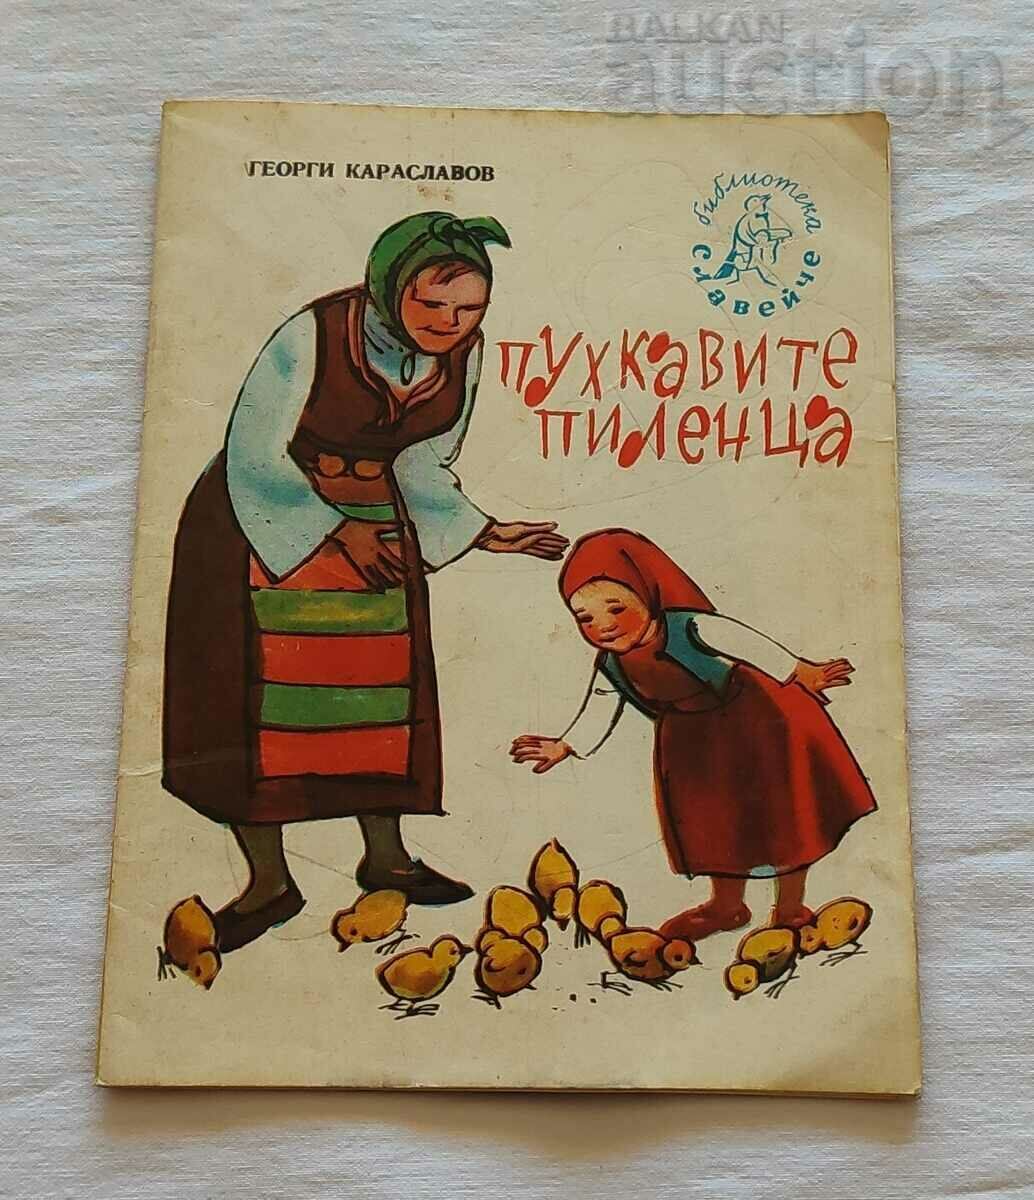 THE FLUFFY CHICKENS G. KARASLAVOV T. PINDAREV 1960 "NIGHTINGALE"